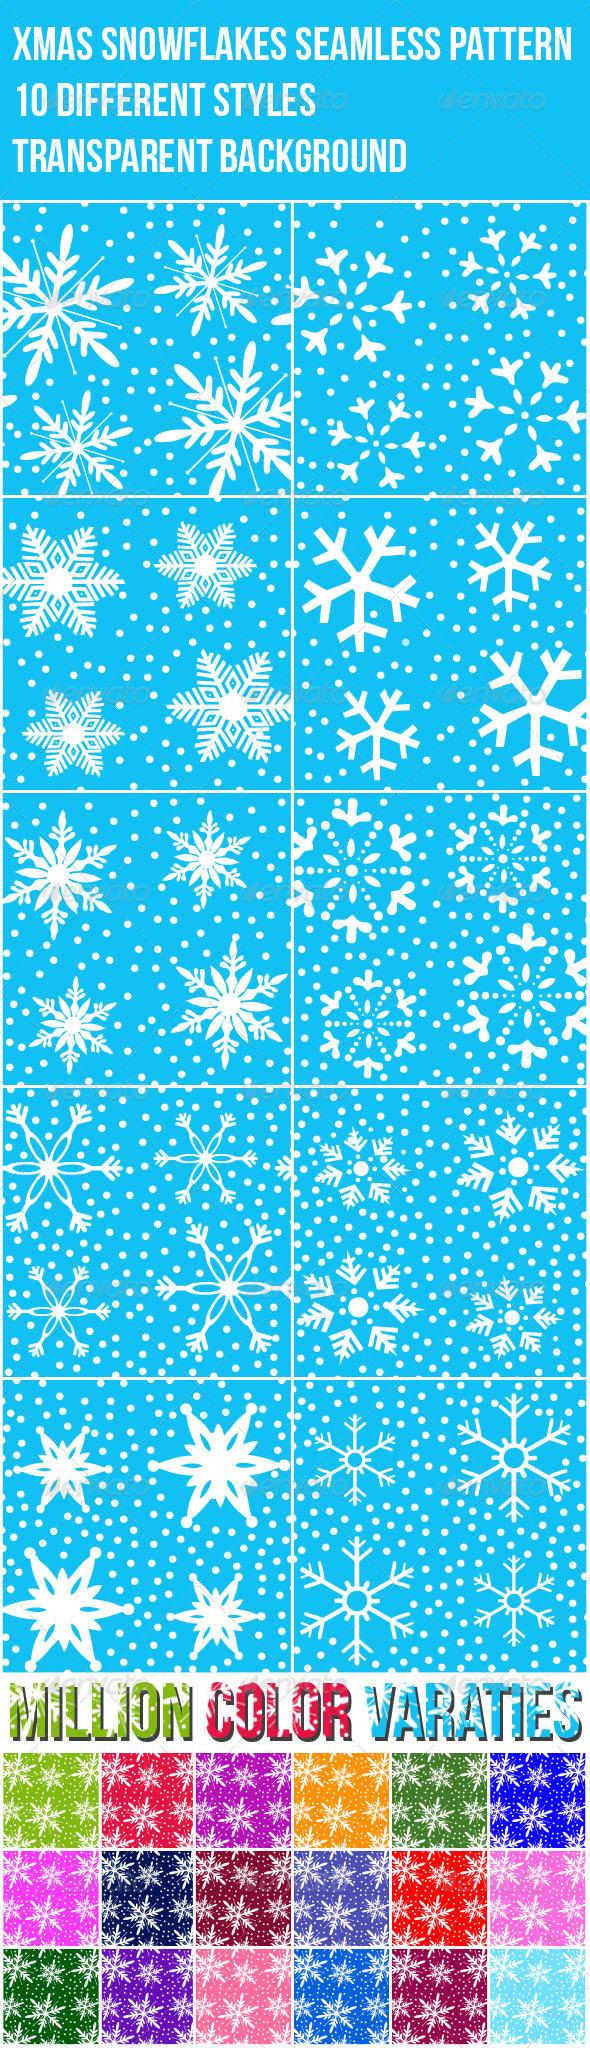 Snowflakes Christmas Photoshop Patterns